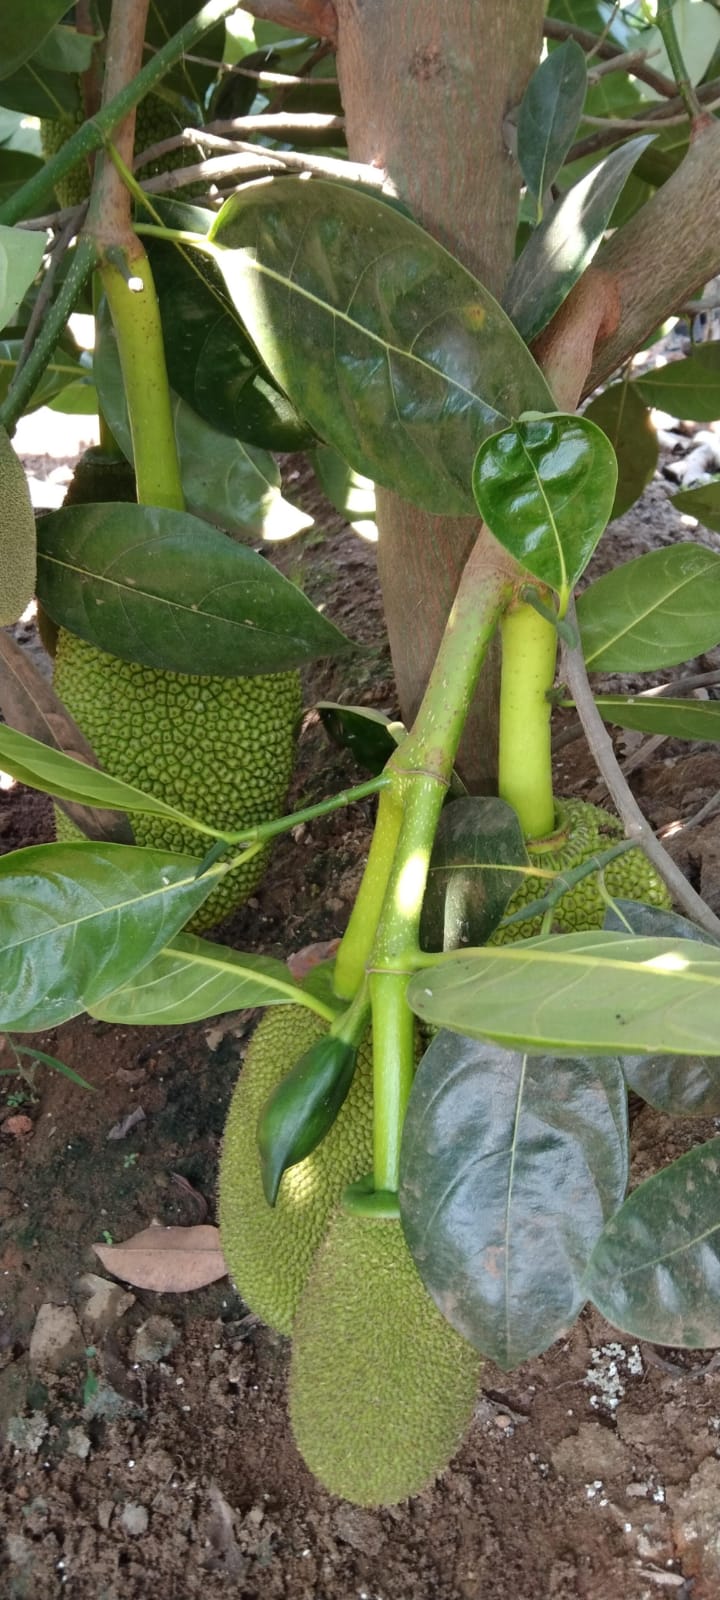 Vietnam Super Early Jackfruit(Grafted) - All Time Jackfruit - Premium Fruit Plants from Plantparadise - Just $700.00! Shop now at Plantparadise